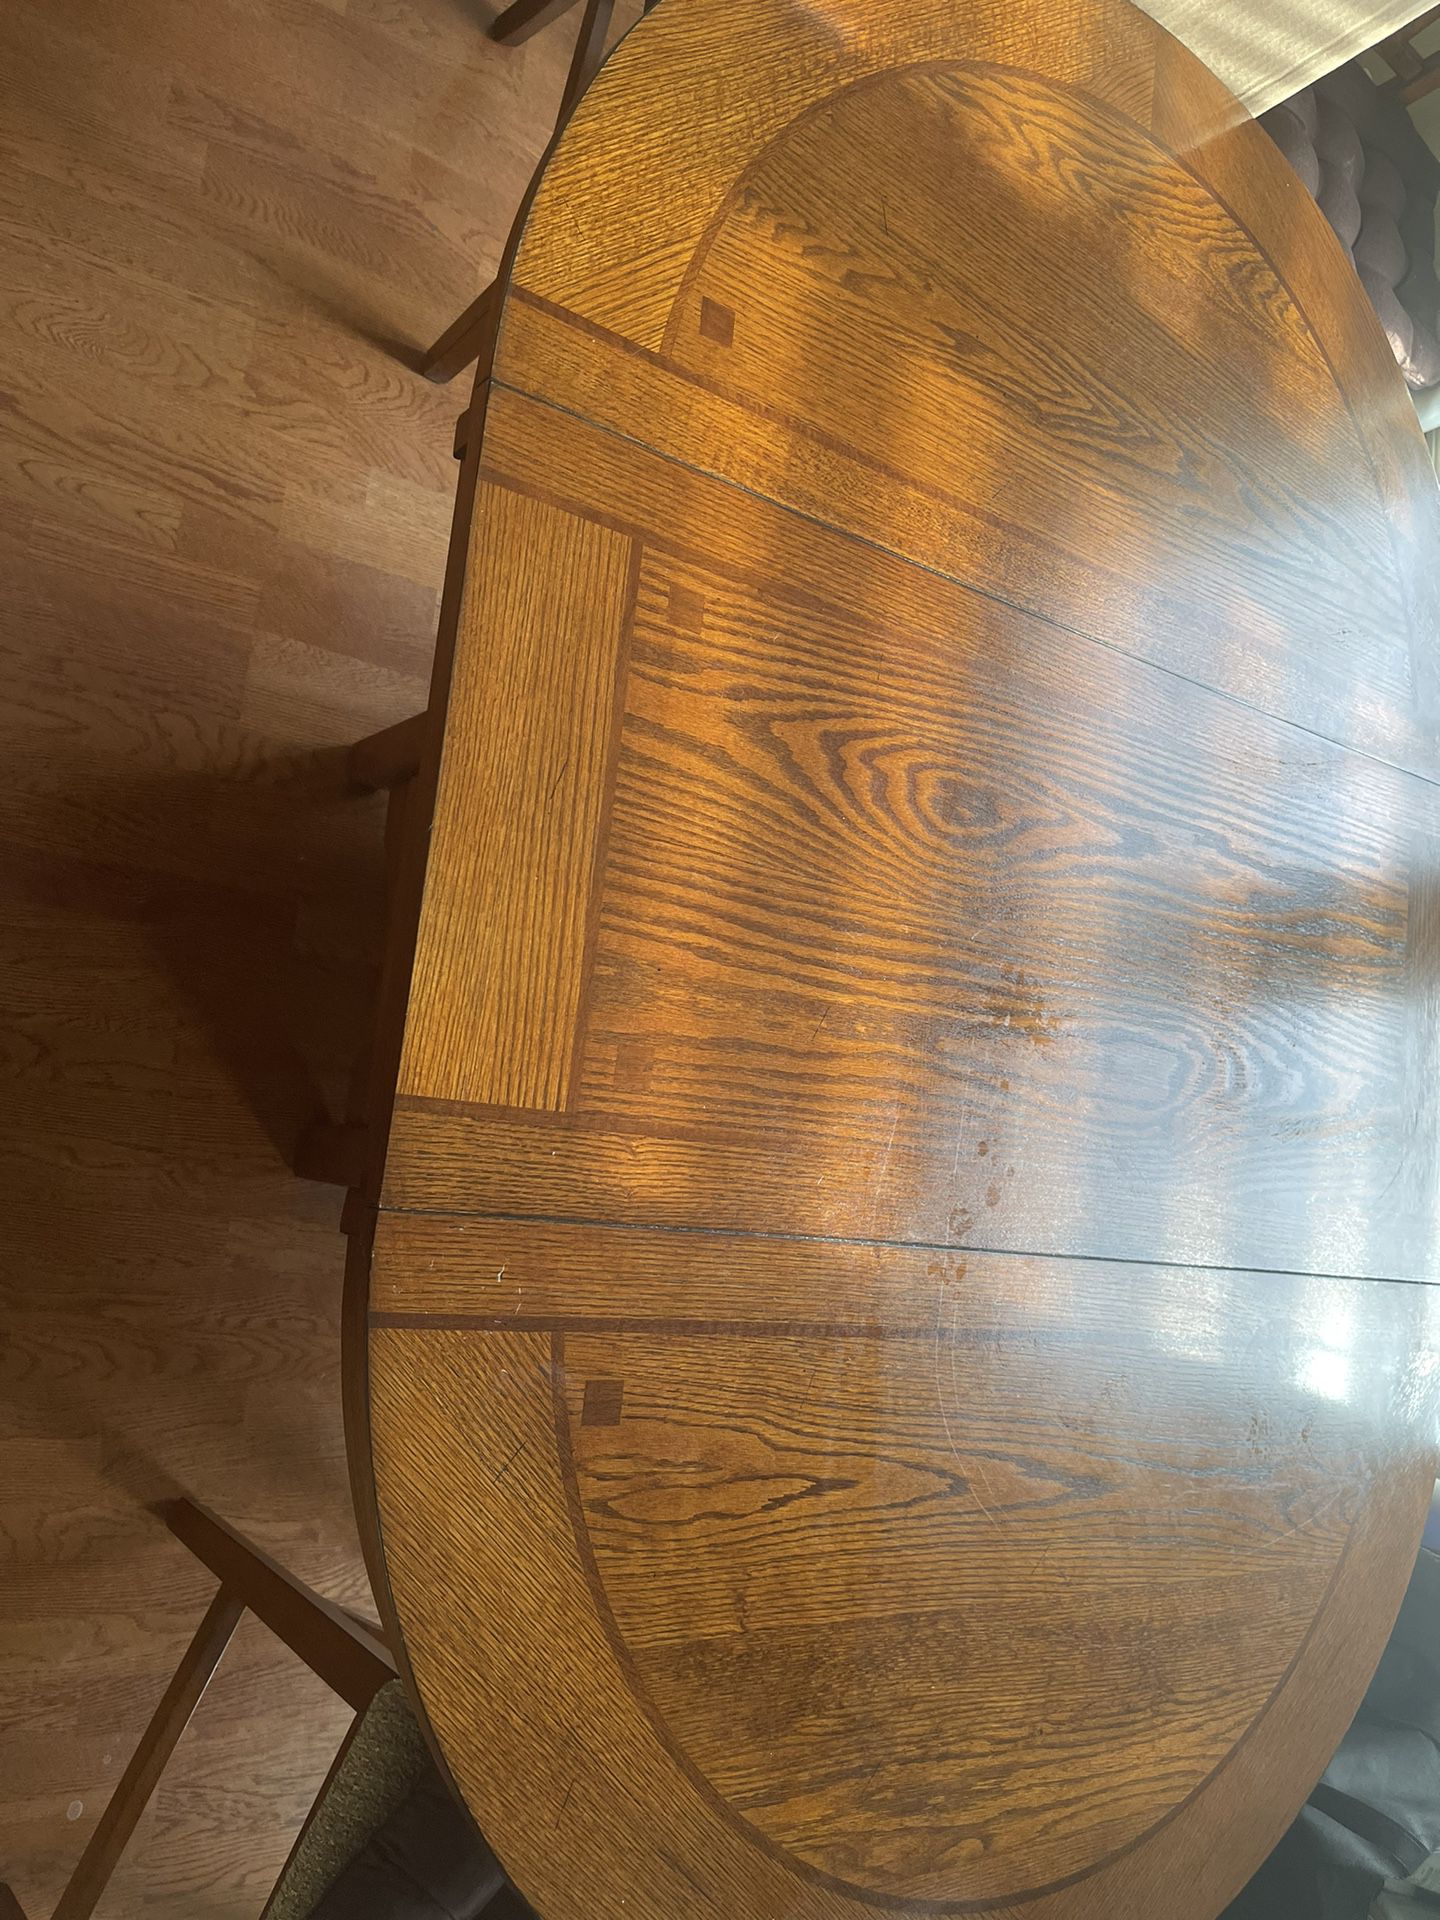 Wood Table